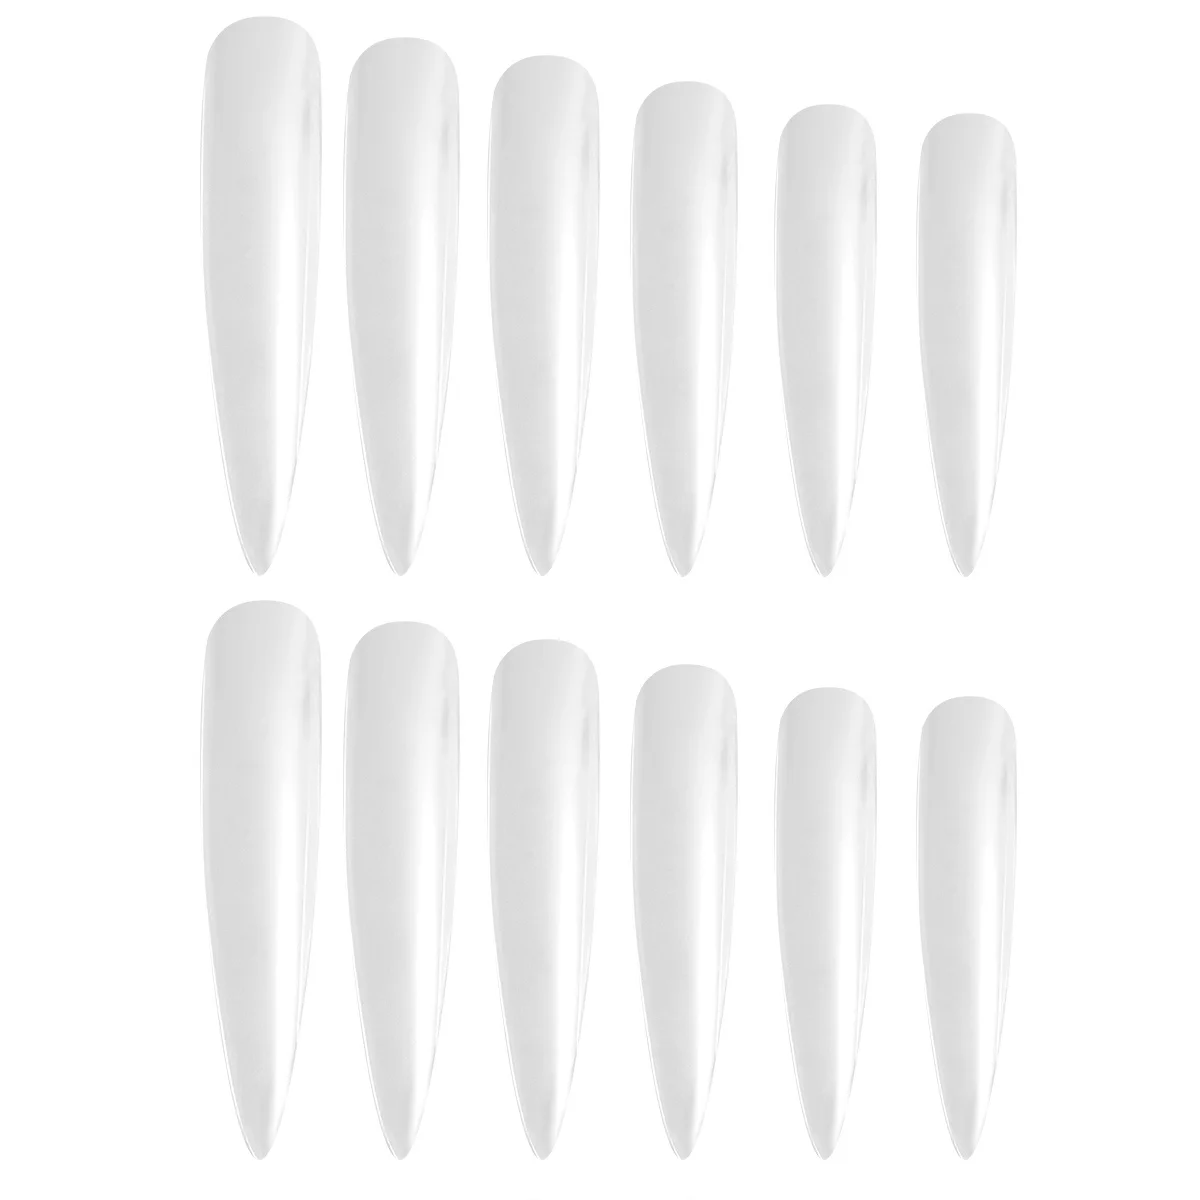 

10 Packs 120PCS Artificial Fingernails Stiletto Nail Tips Coffin Sharp False Nail Practice Nail Tip Nail Salon Accessories for